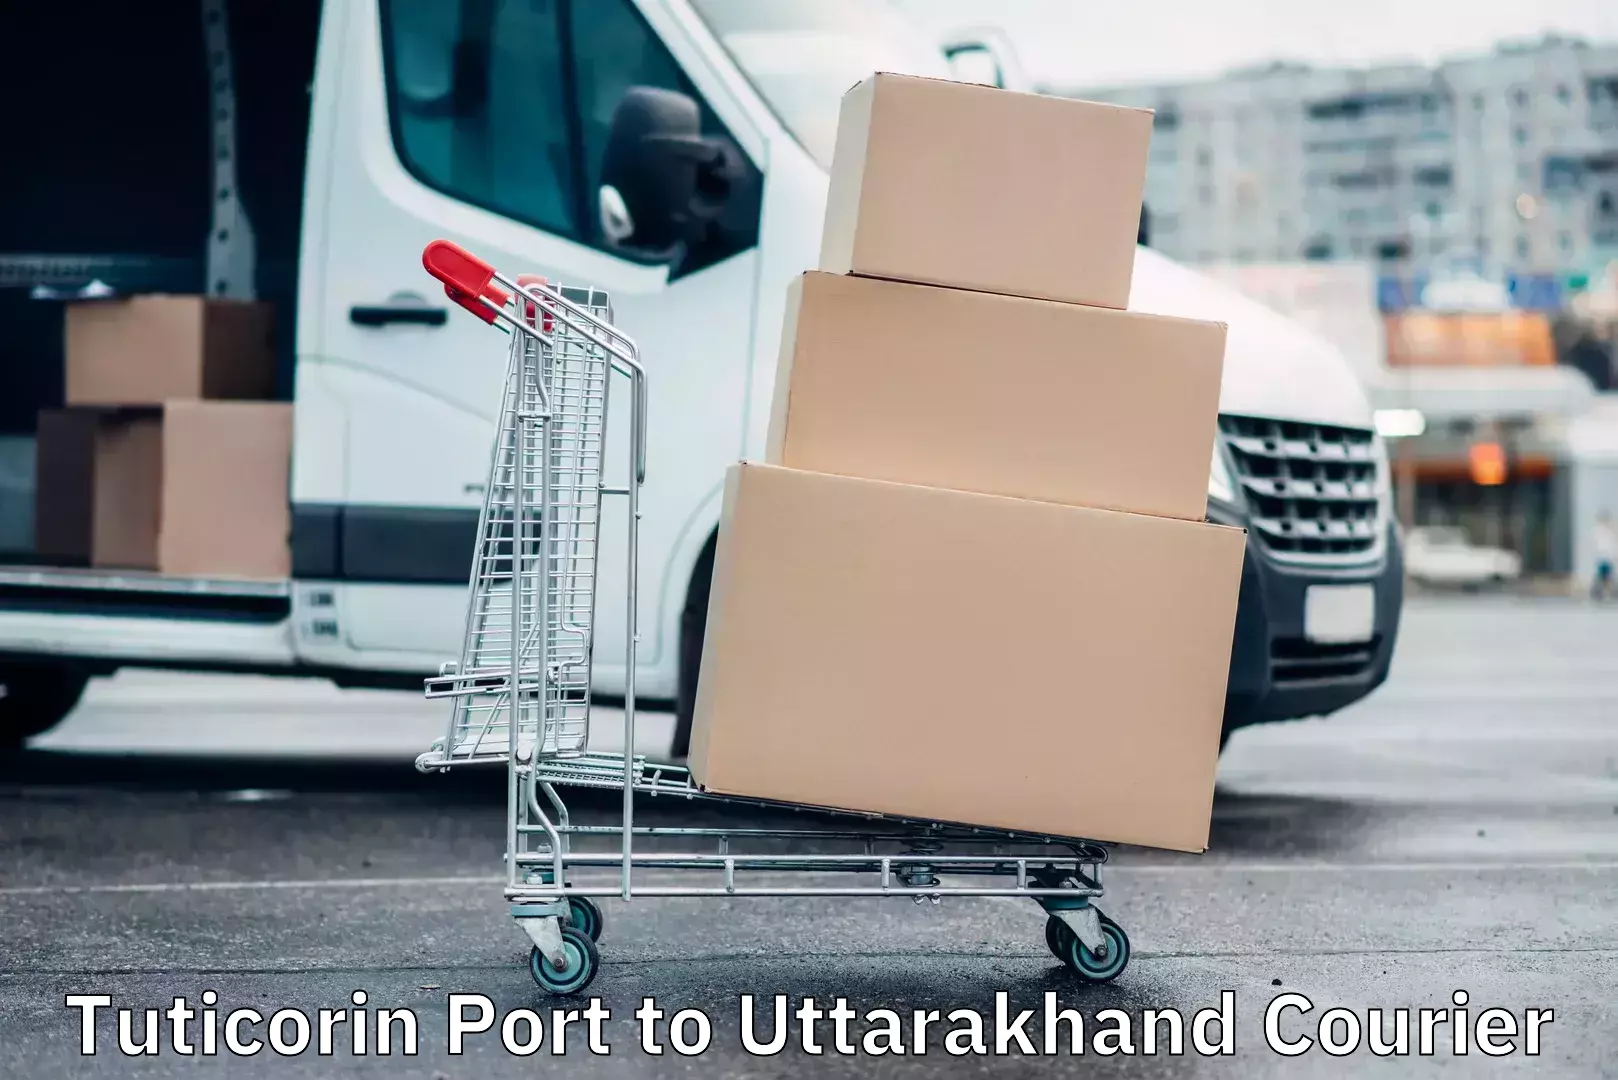 Modern delivery technologies Tuticorin Port to Uttarakhand